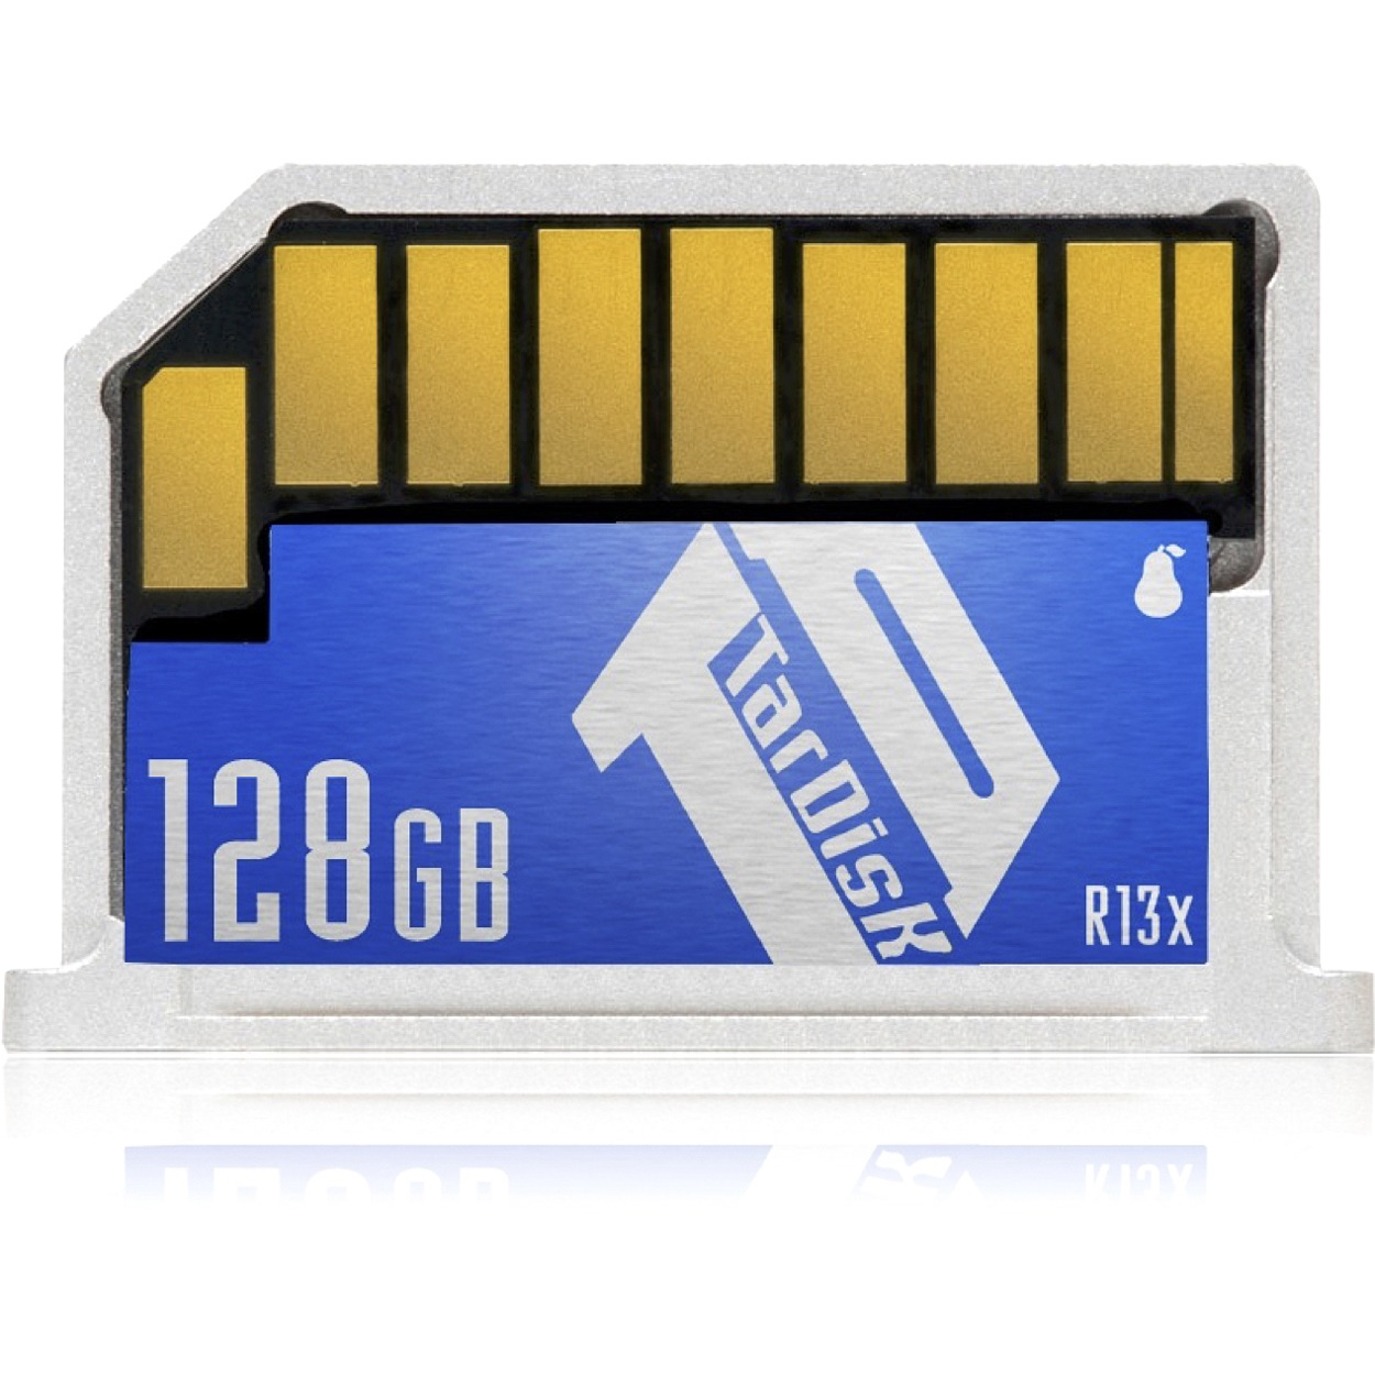 TarDisk R13X 128 GB Class 3/UHS-I Flash Memory - Walmart.com